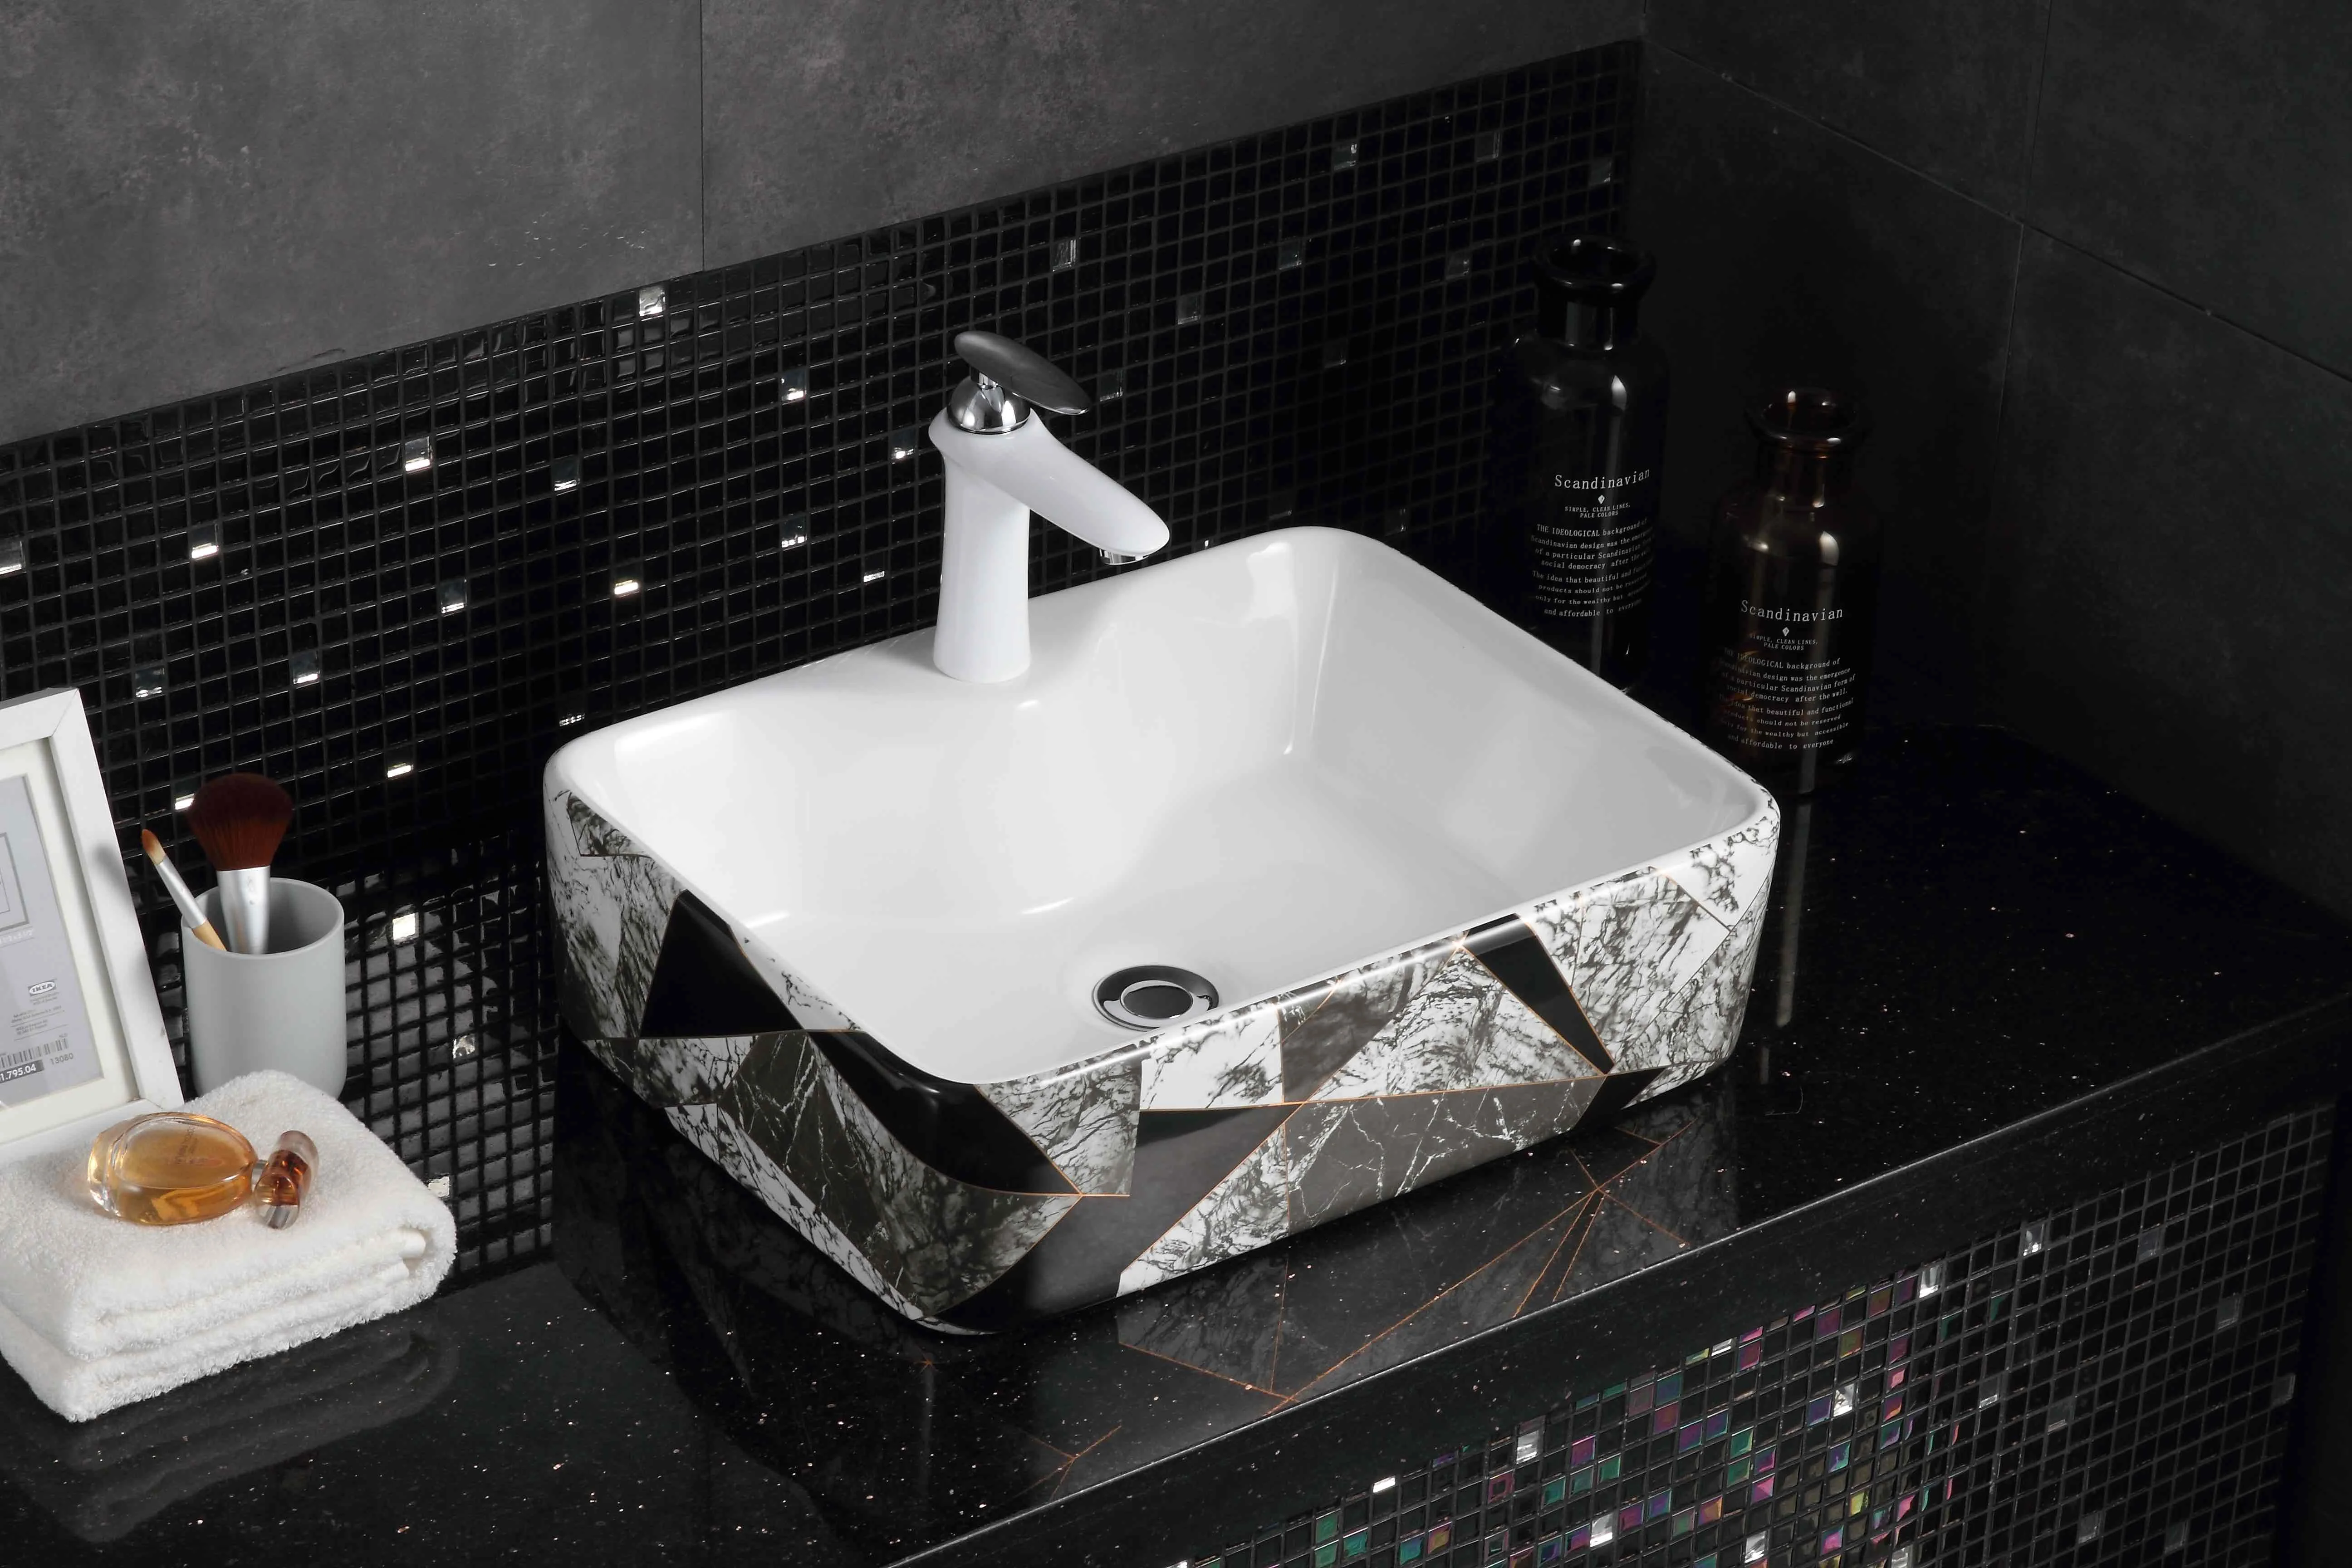 High quality wholesale modern fashion ceramic bathroom sink black water drop pattern  art basin